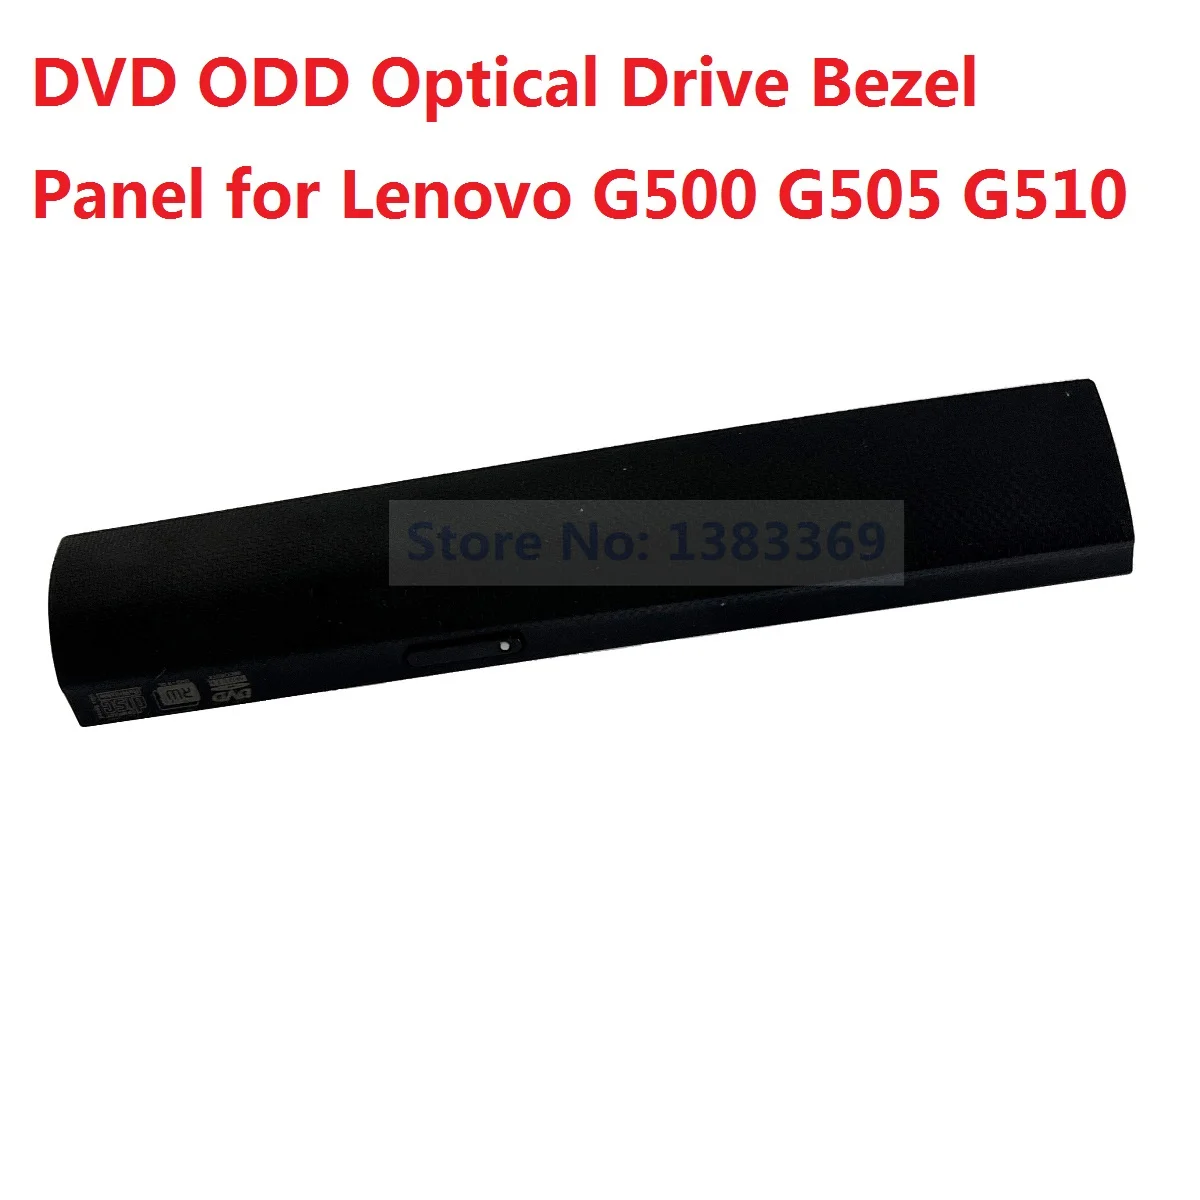 DVD-RW, DVD מוזר CD הכונן האופטי הקאדילק לוח הדלת בלוחית לוח הבקרה כיסוי פנל קדמי לבלבל סוגר עבור Lenovo G500 G505 G510 - 2